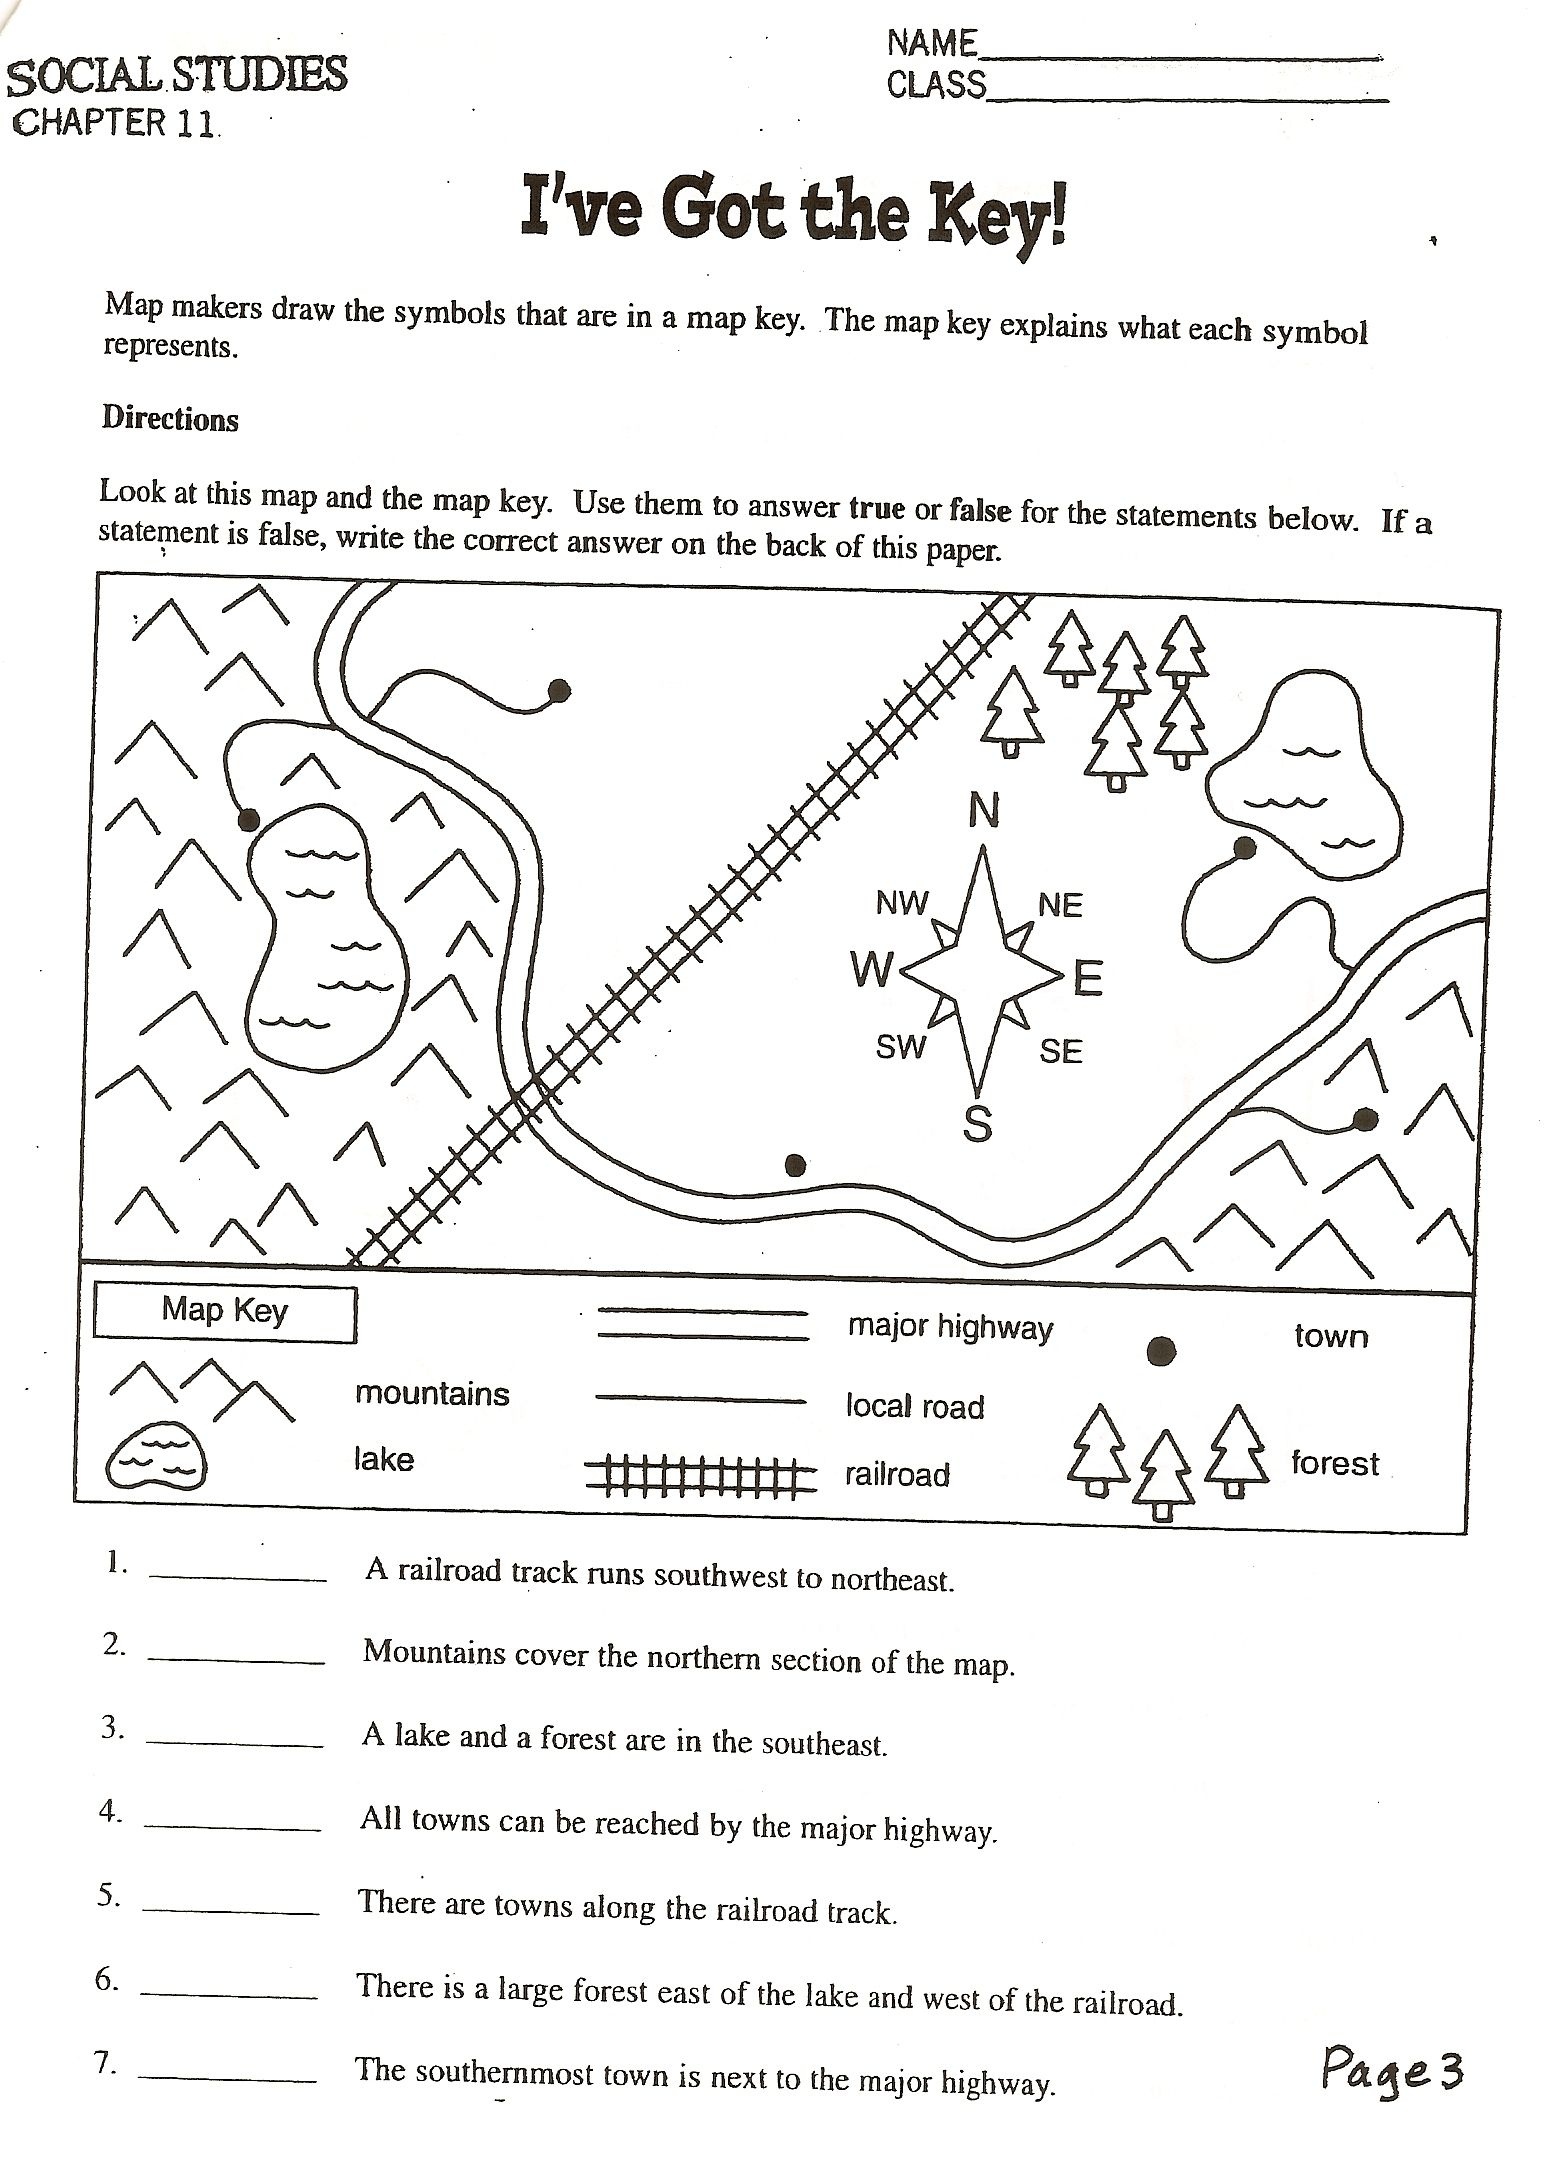 Free Printable Social Studies Worksheets For 6th Graders